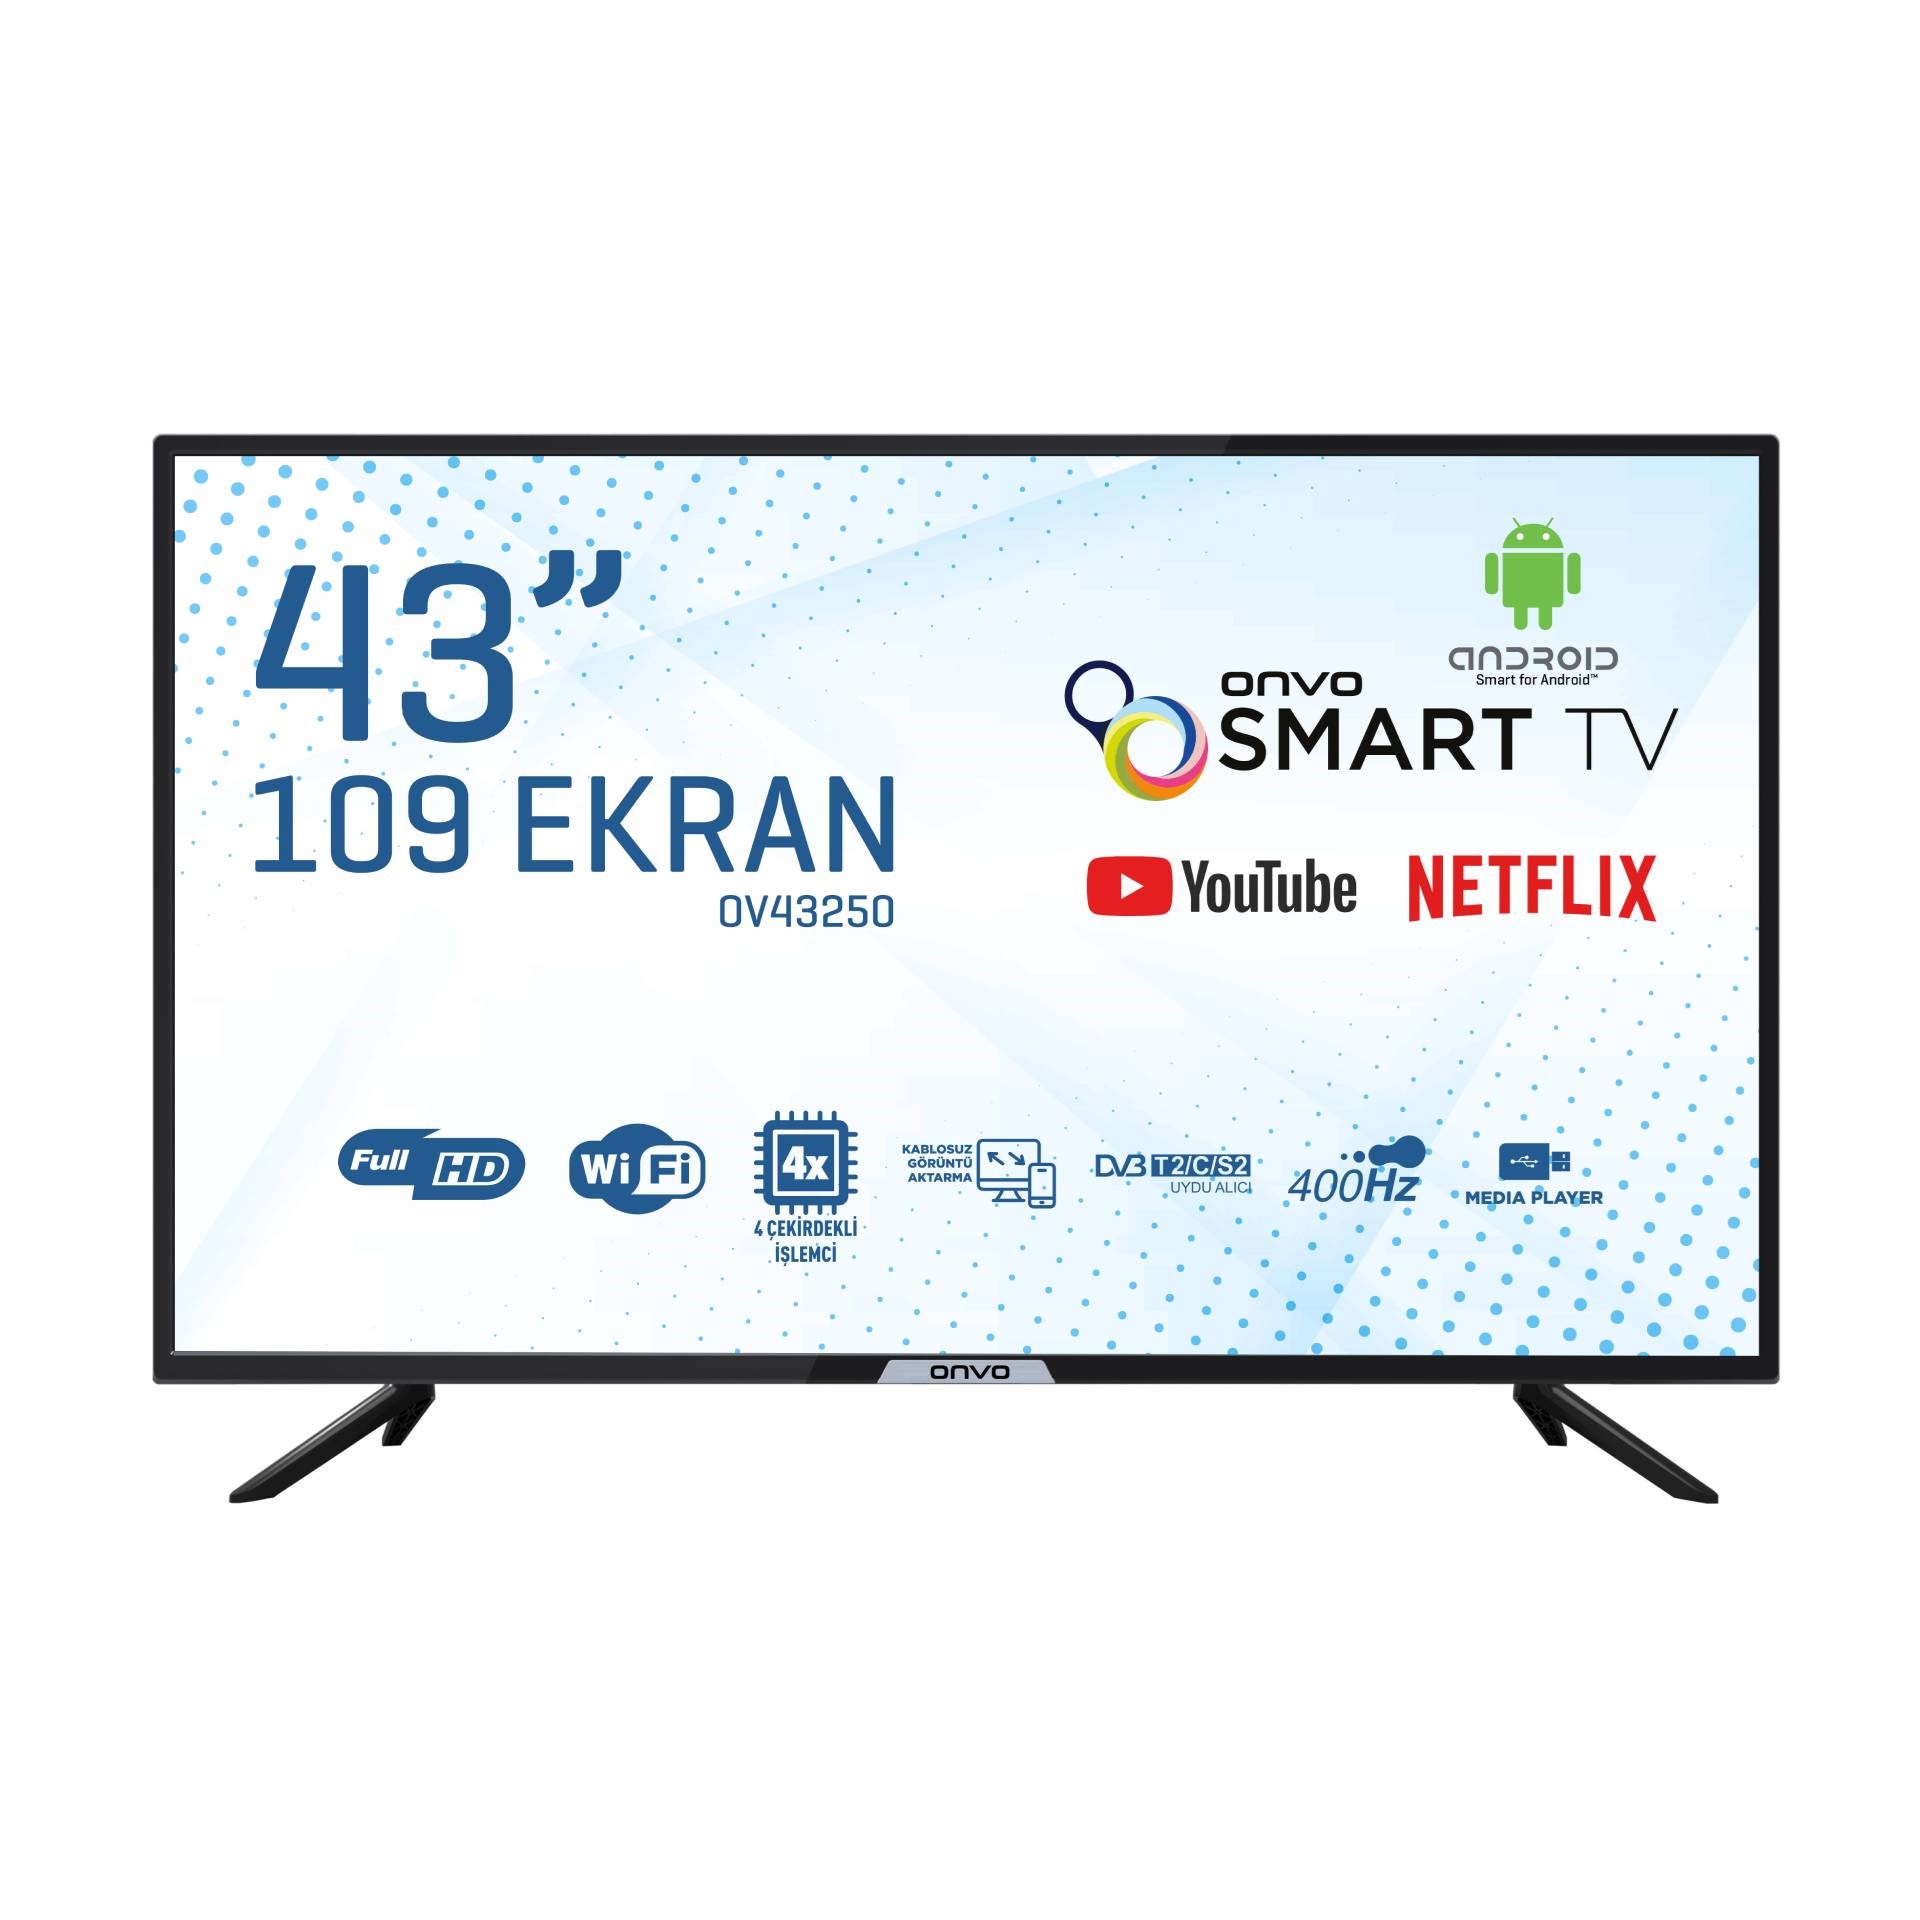 Onvo OV43250 43" Full HD Android Smart LED TV